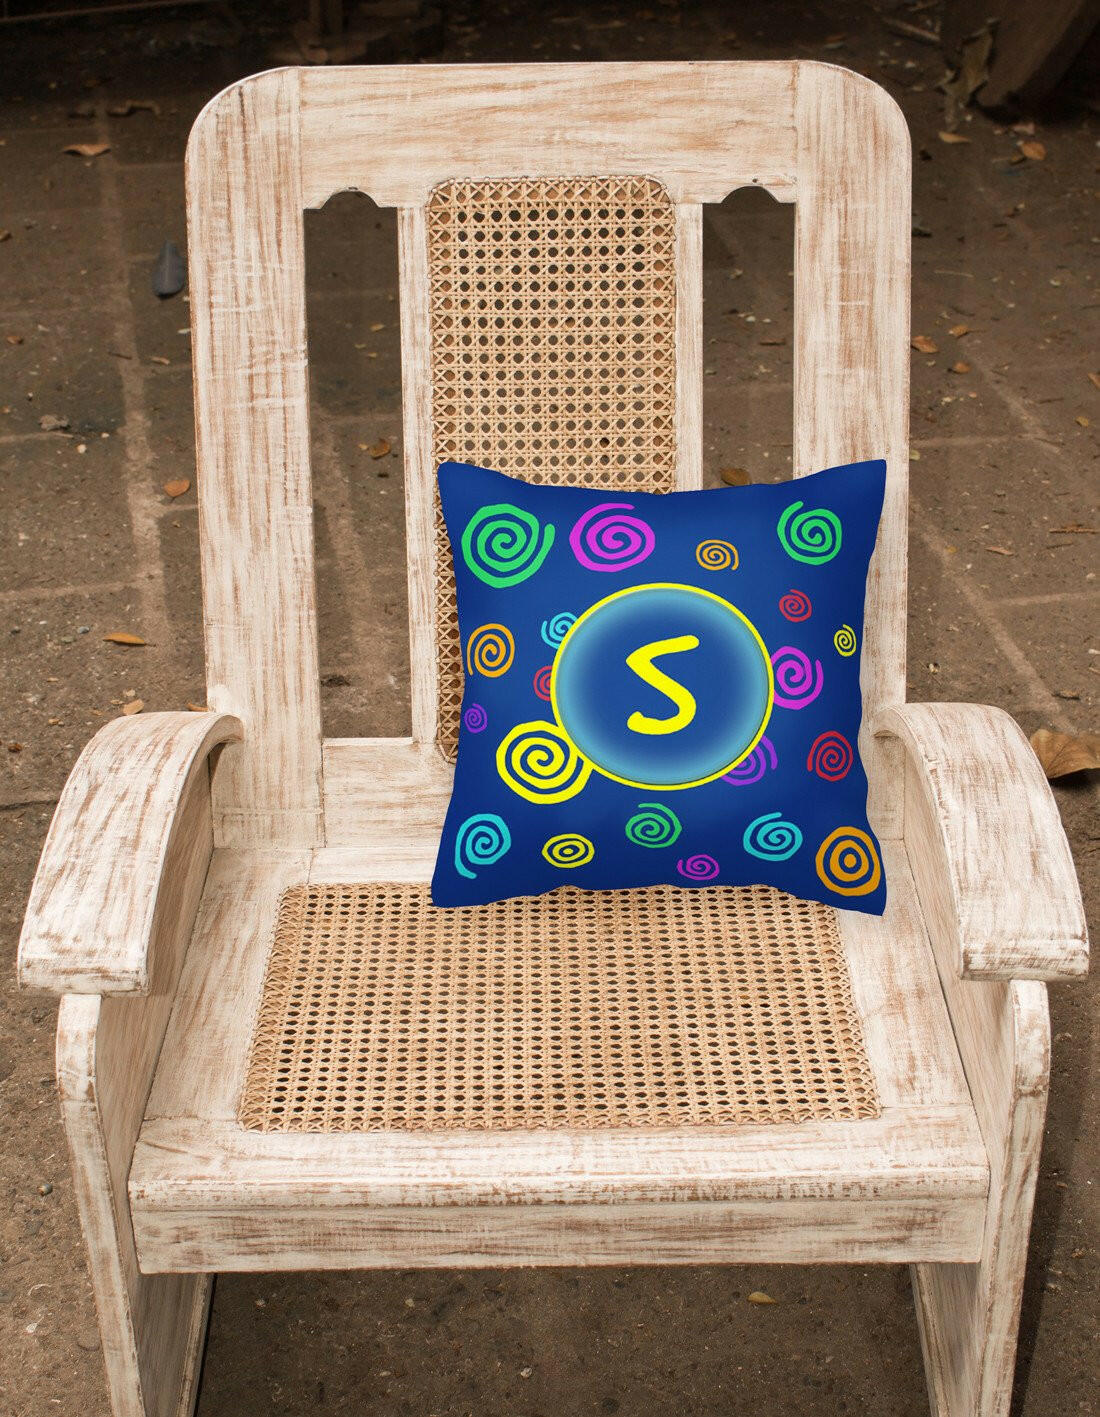 Letter S Initial Monogram - Blue Swirls Decorative   Canvas Fabric Pillow - the-store.com